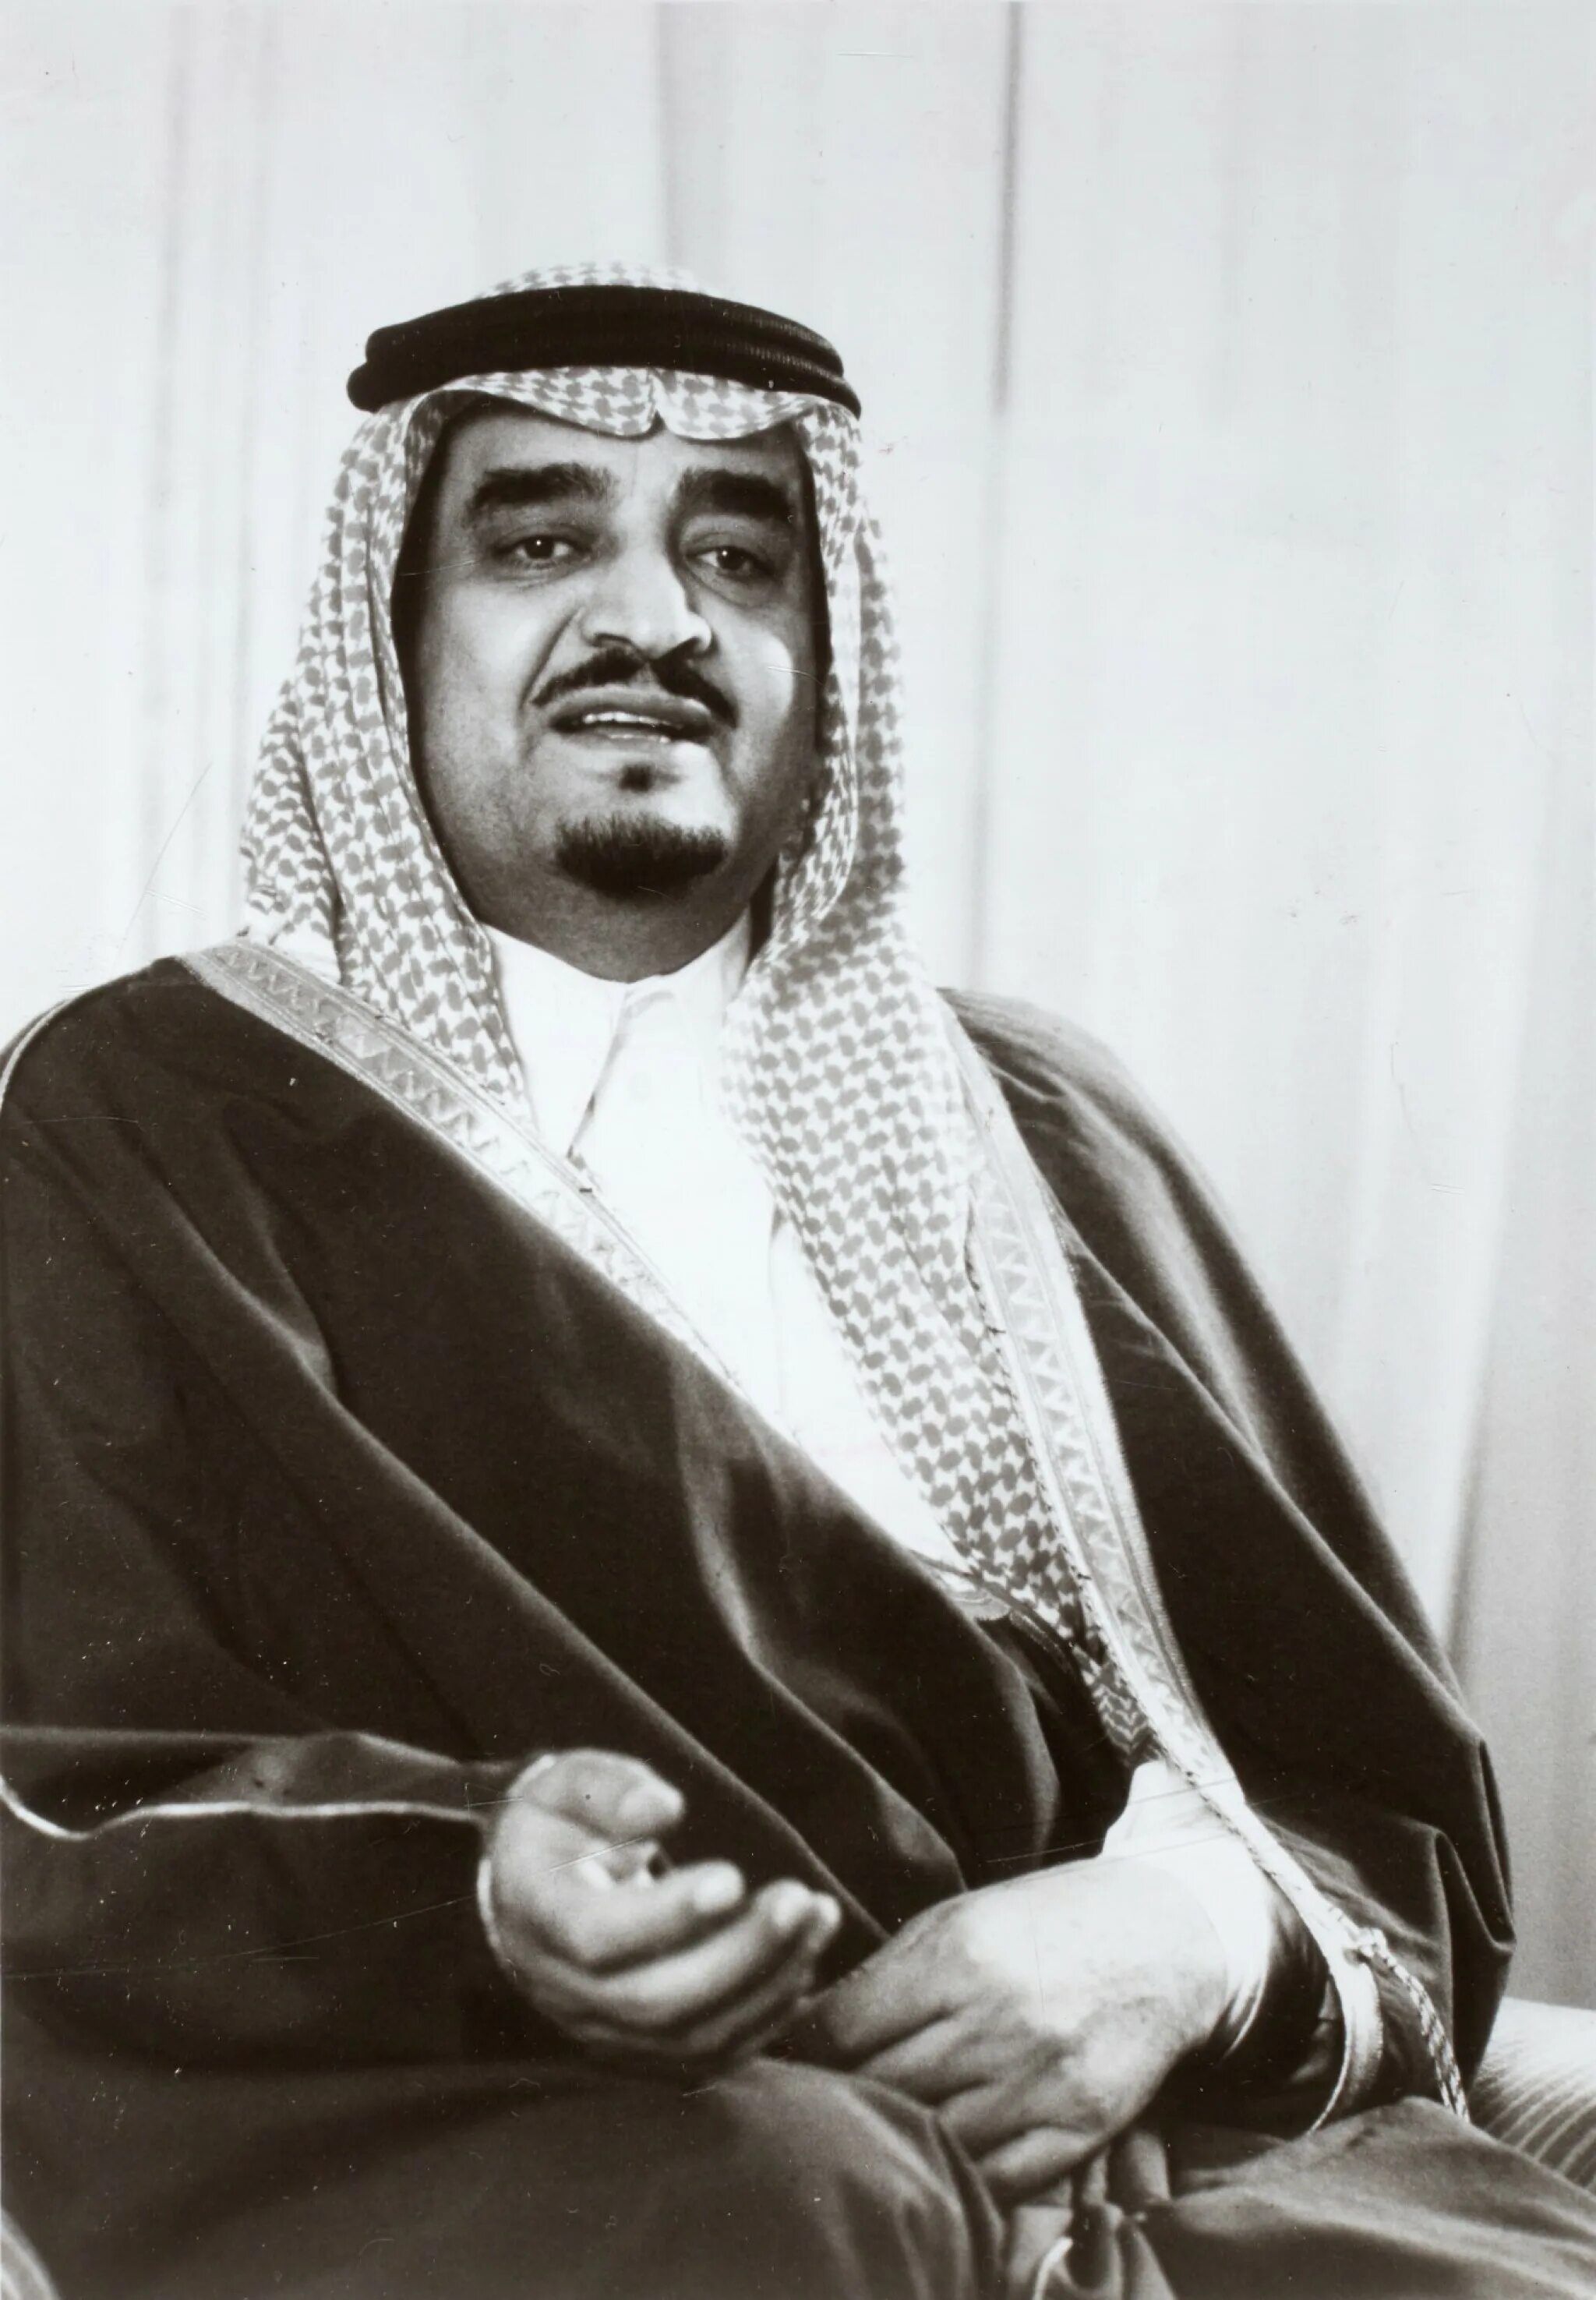 Фахд ибн Абдул-Азиз. Фахд ибн Абдель Азиз Аль Сауд. Джамма Король Фахд. Ахмад Аль Сауд. Сауд ибн фахд аль сауд